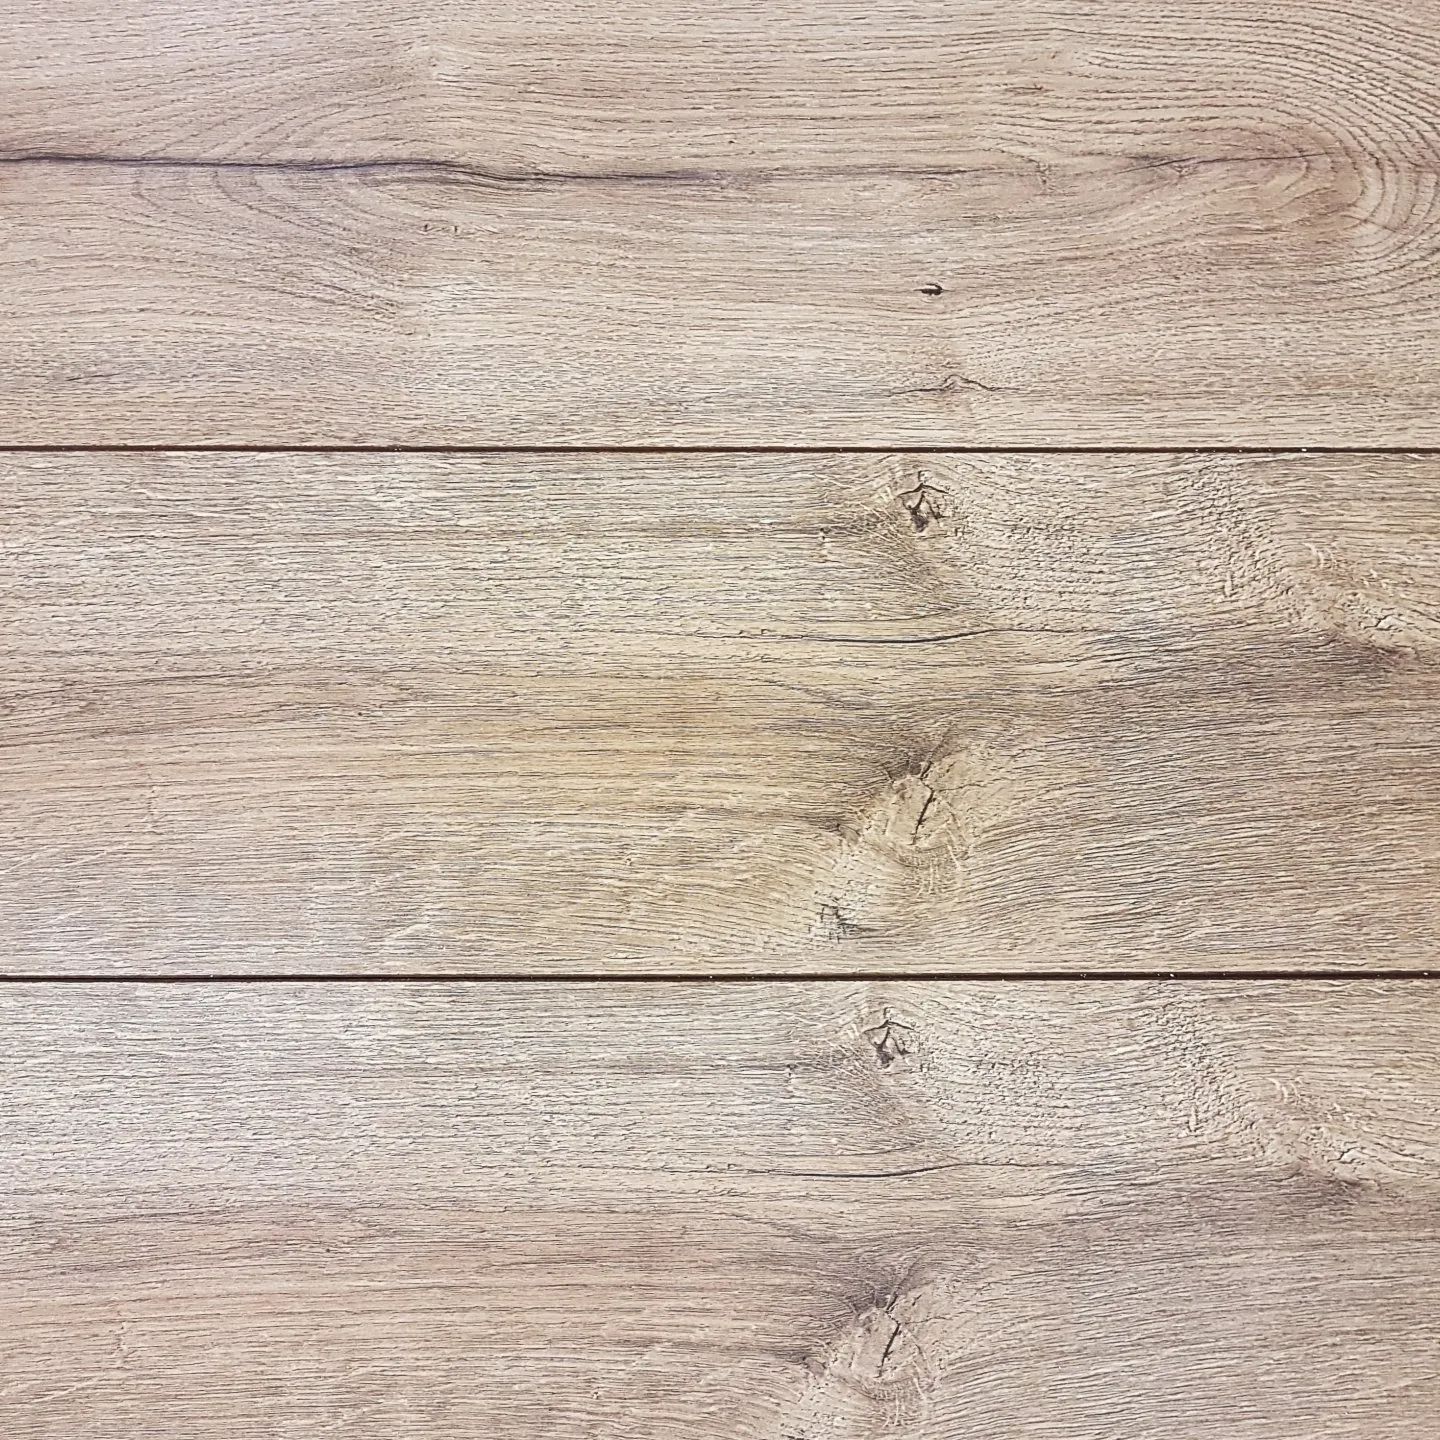 close up of an ash wood floor with horizontal slats